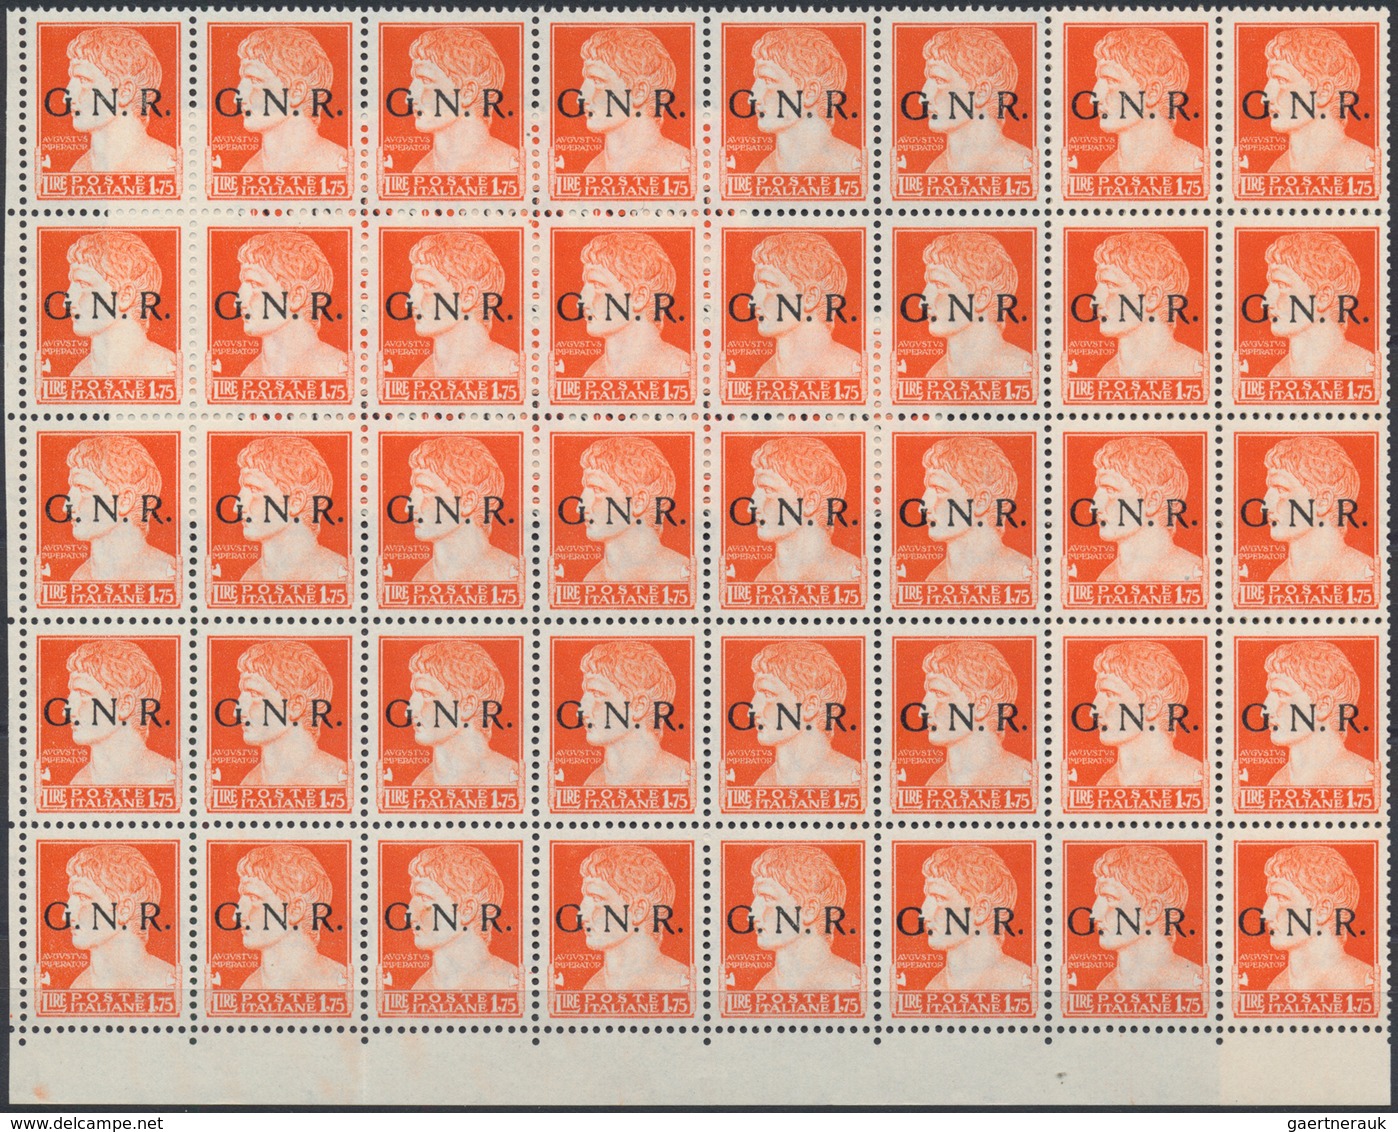 Italien: 1944, Republika Sociale "G.N.R." Issue 1,75 Lire Orange 336 Stamps Mint Never Hinged Large - Verzamelingen